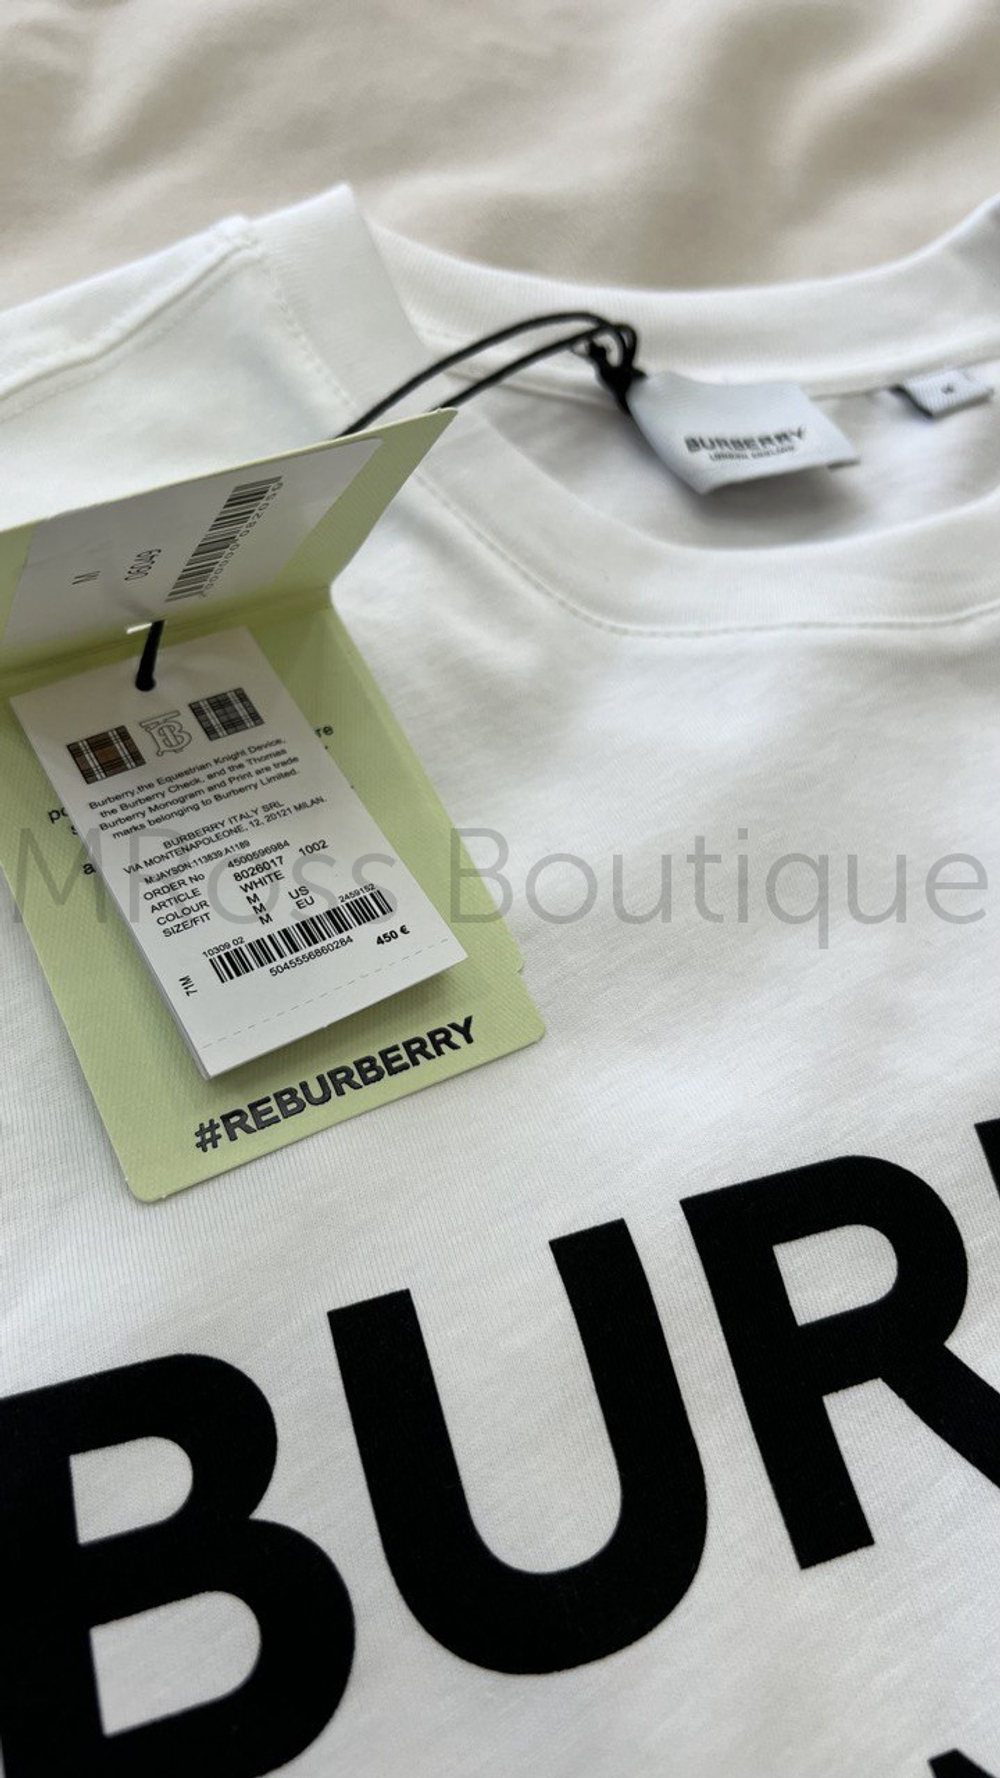 Белая футболка Burberry премиум класса